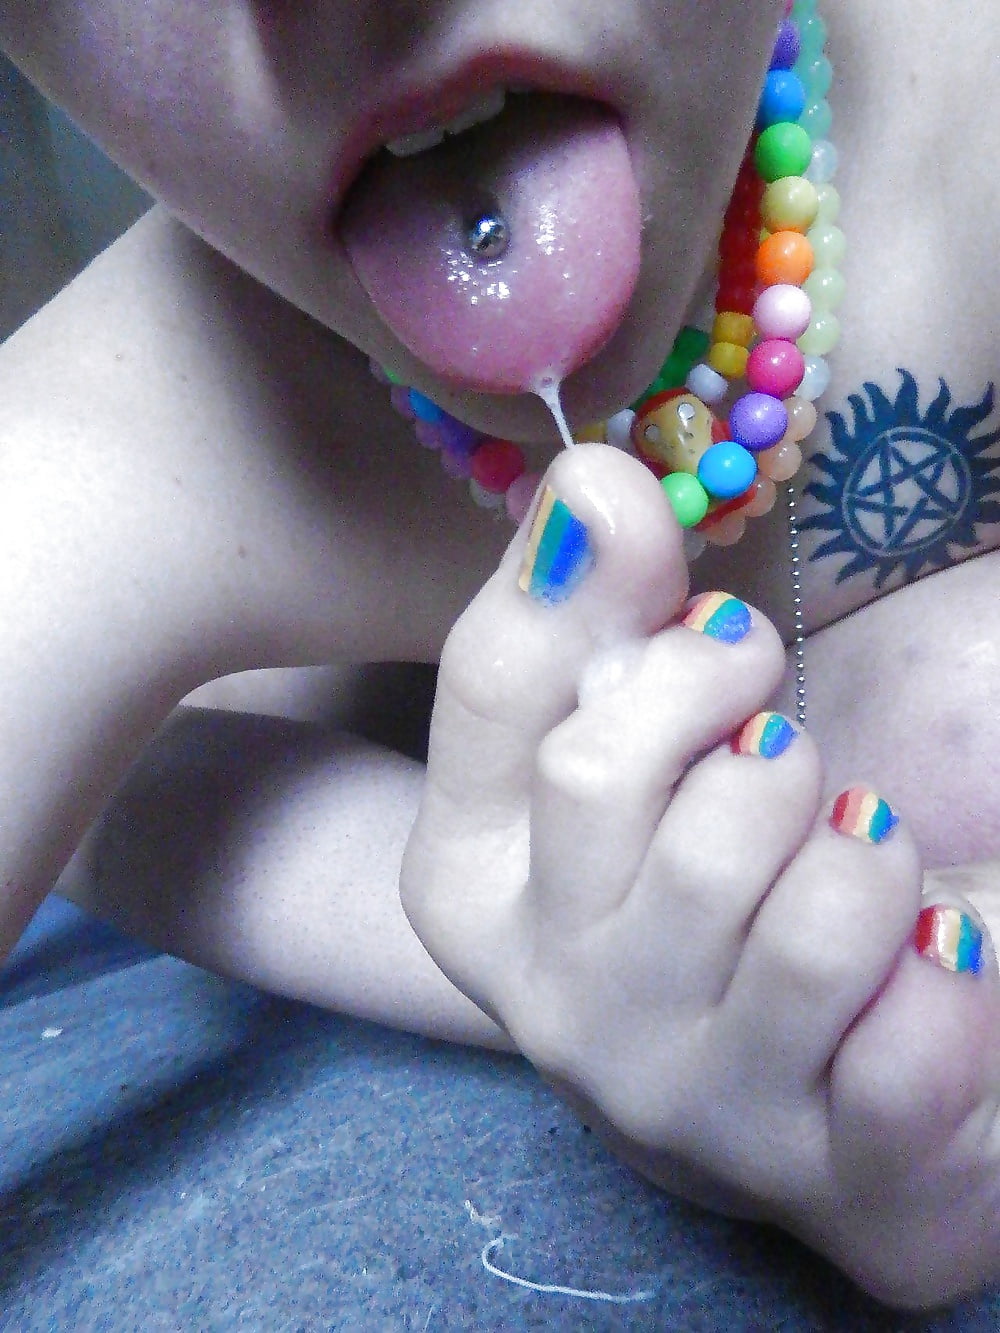 Piercing Girl Sucking Her Toes